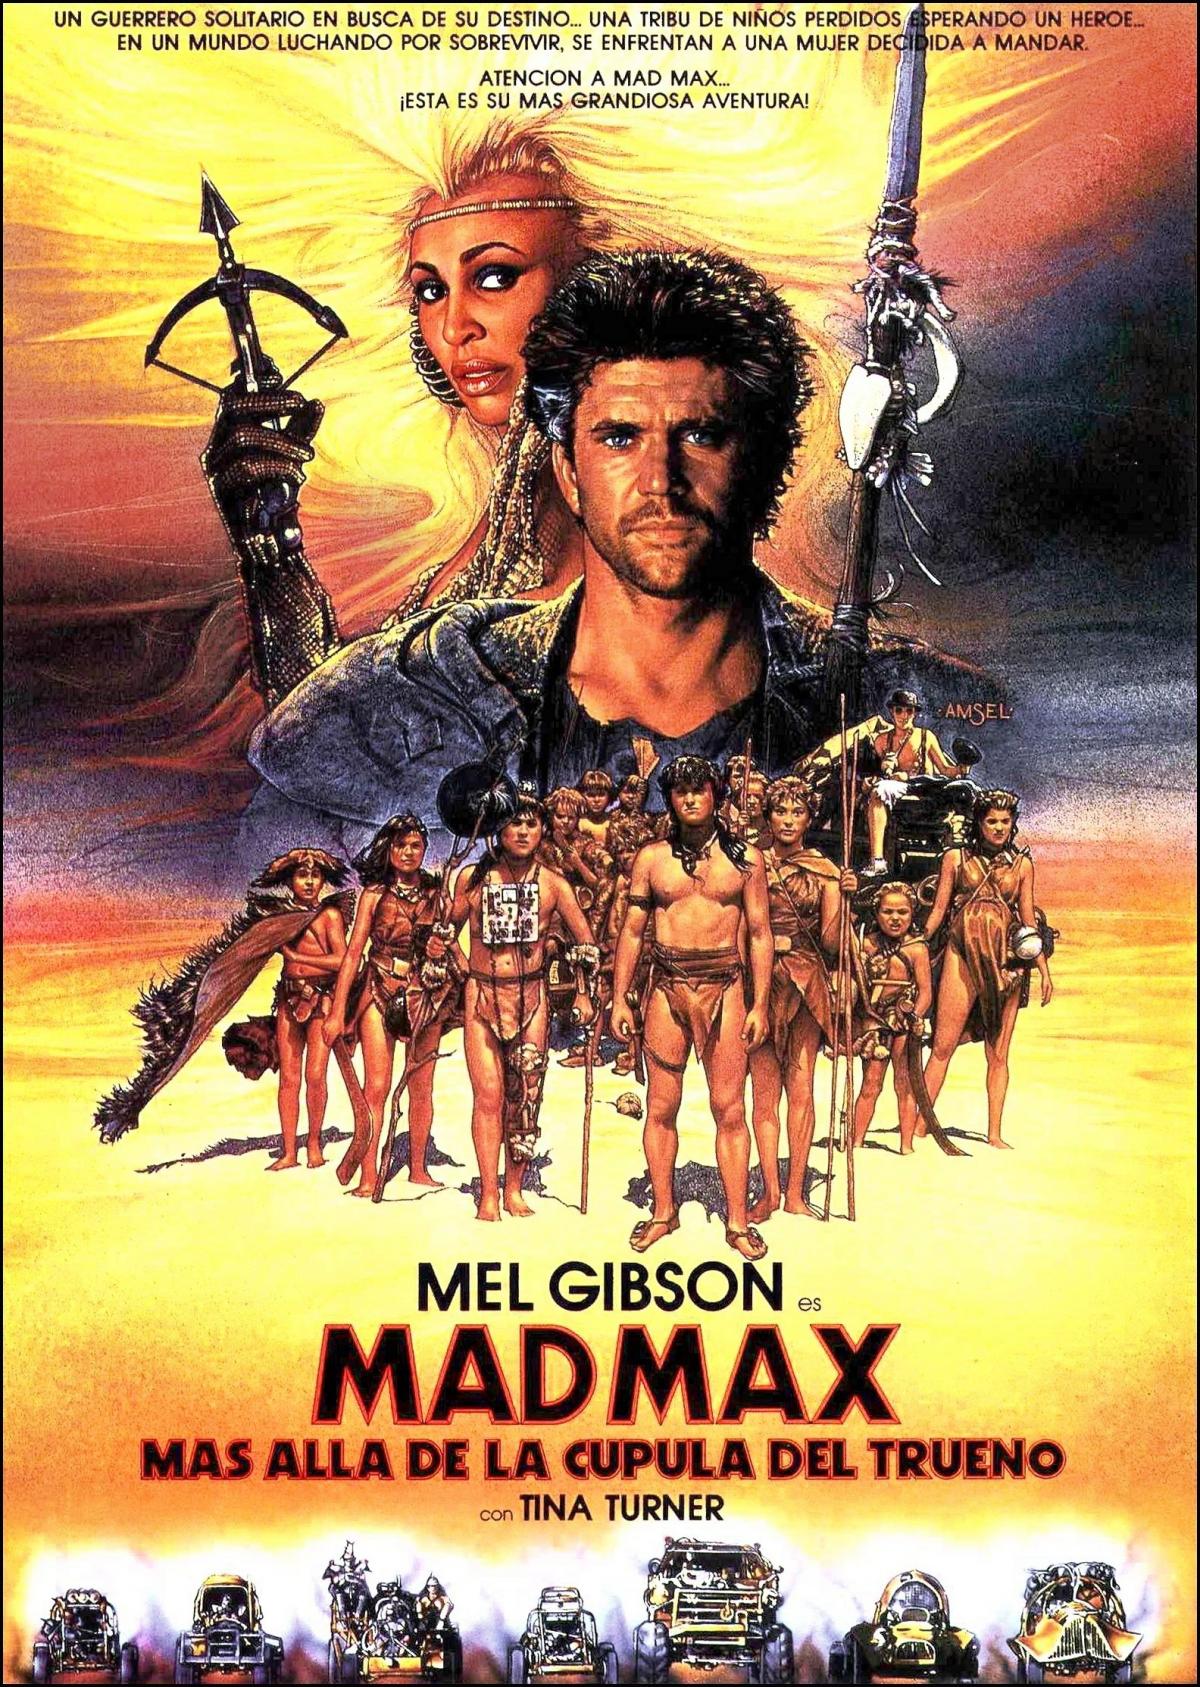 FULL MOVIE: Mad Max: Beyond Thunderdome (1985)